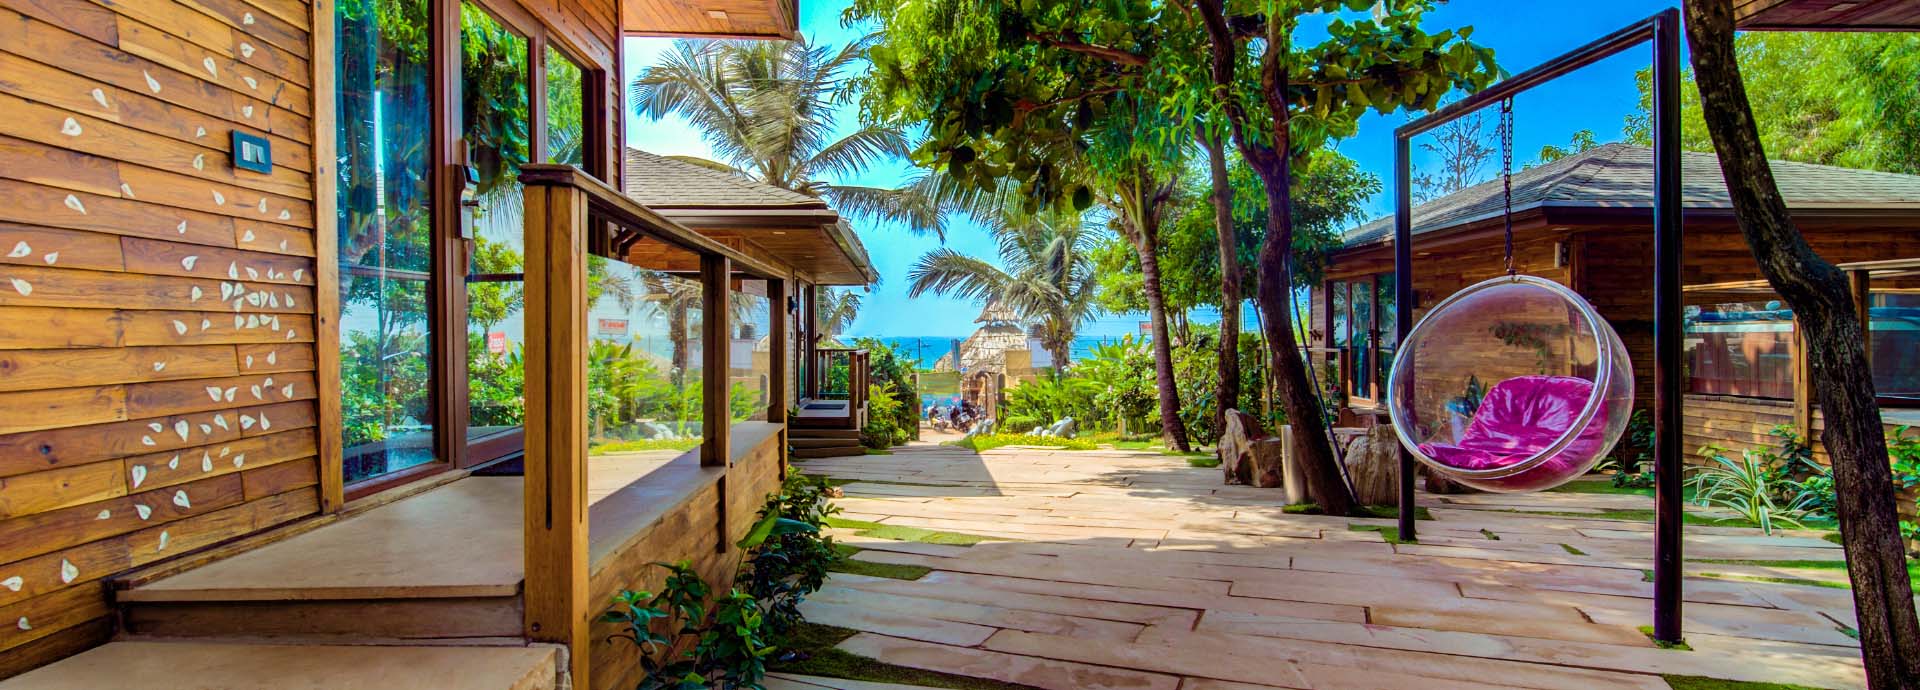 Five Star Luxury Beach Resorts in Goa - The Baga Beach Resort